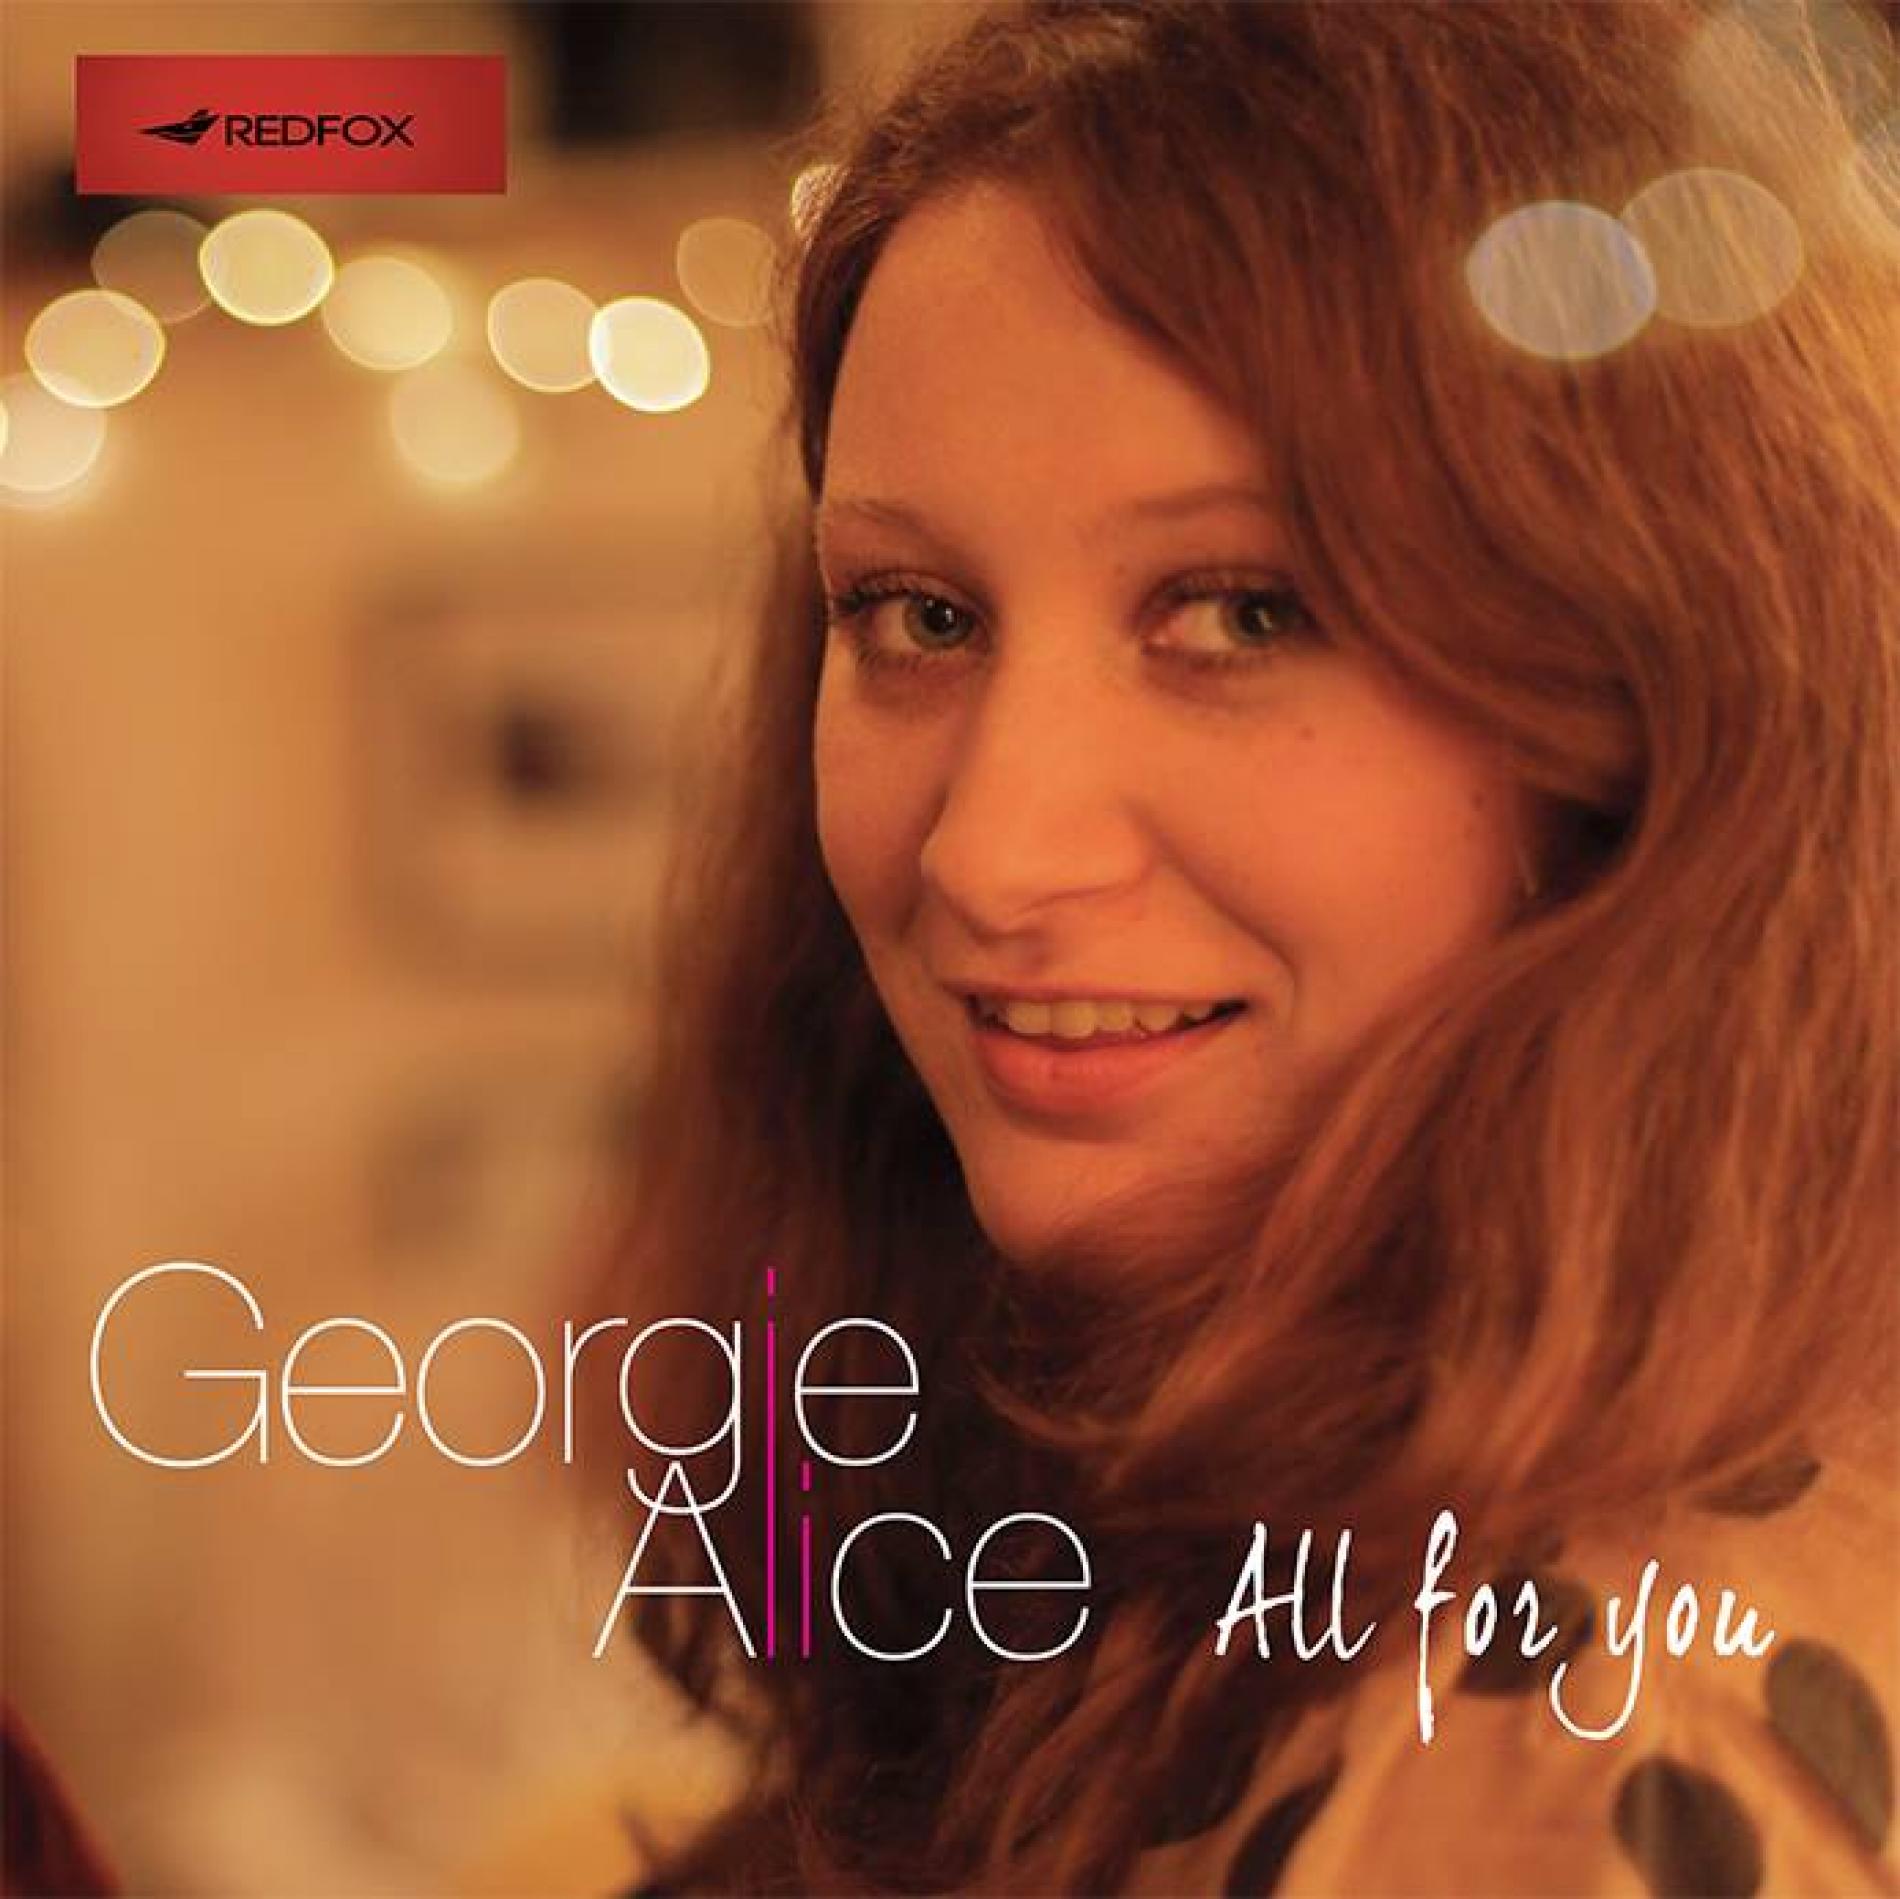 Georgie Alice Announces New Music